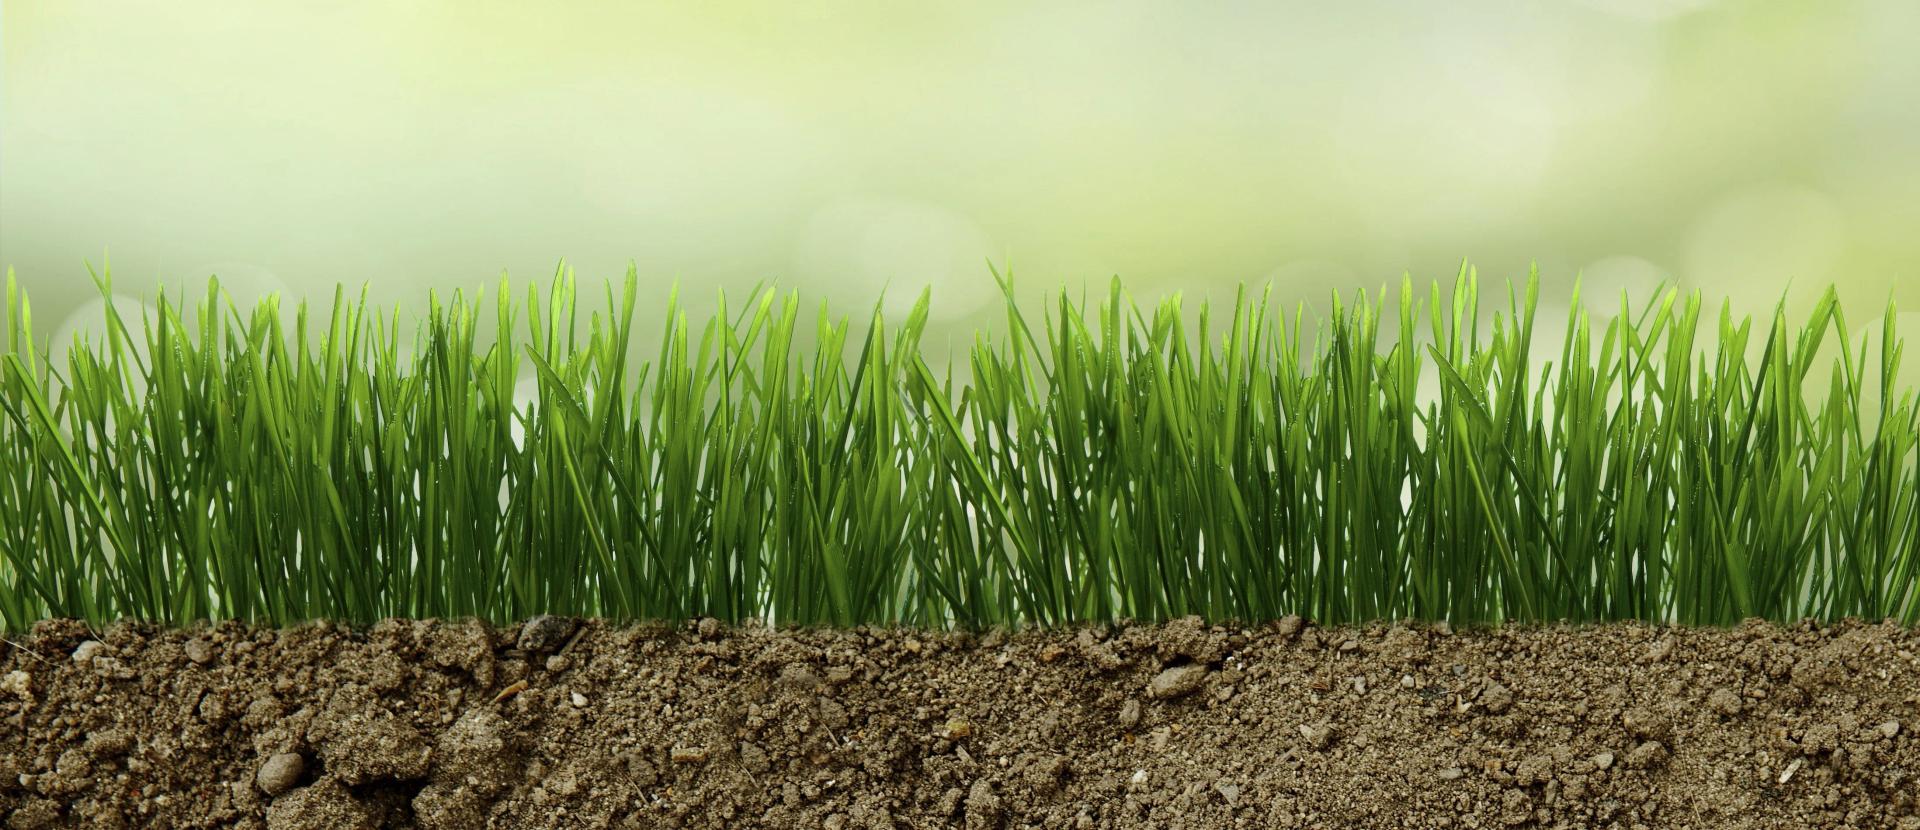 Grass in Dry Soil